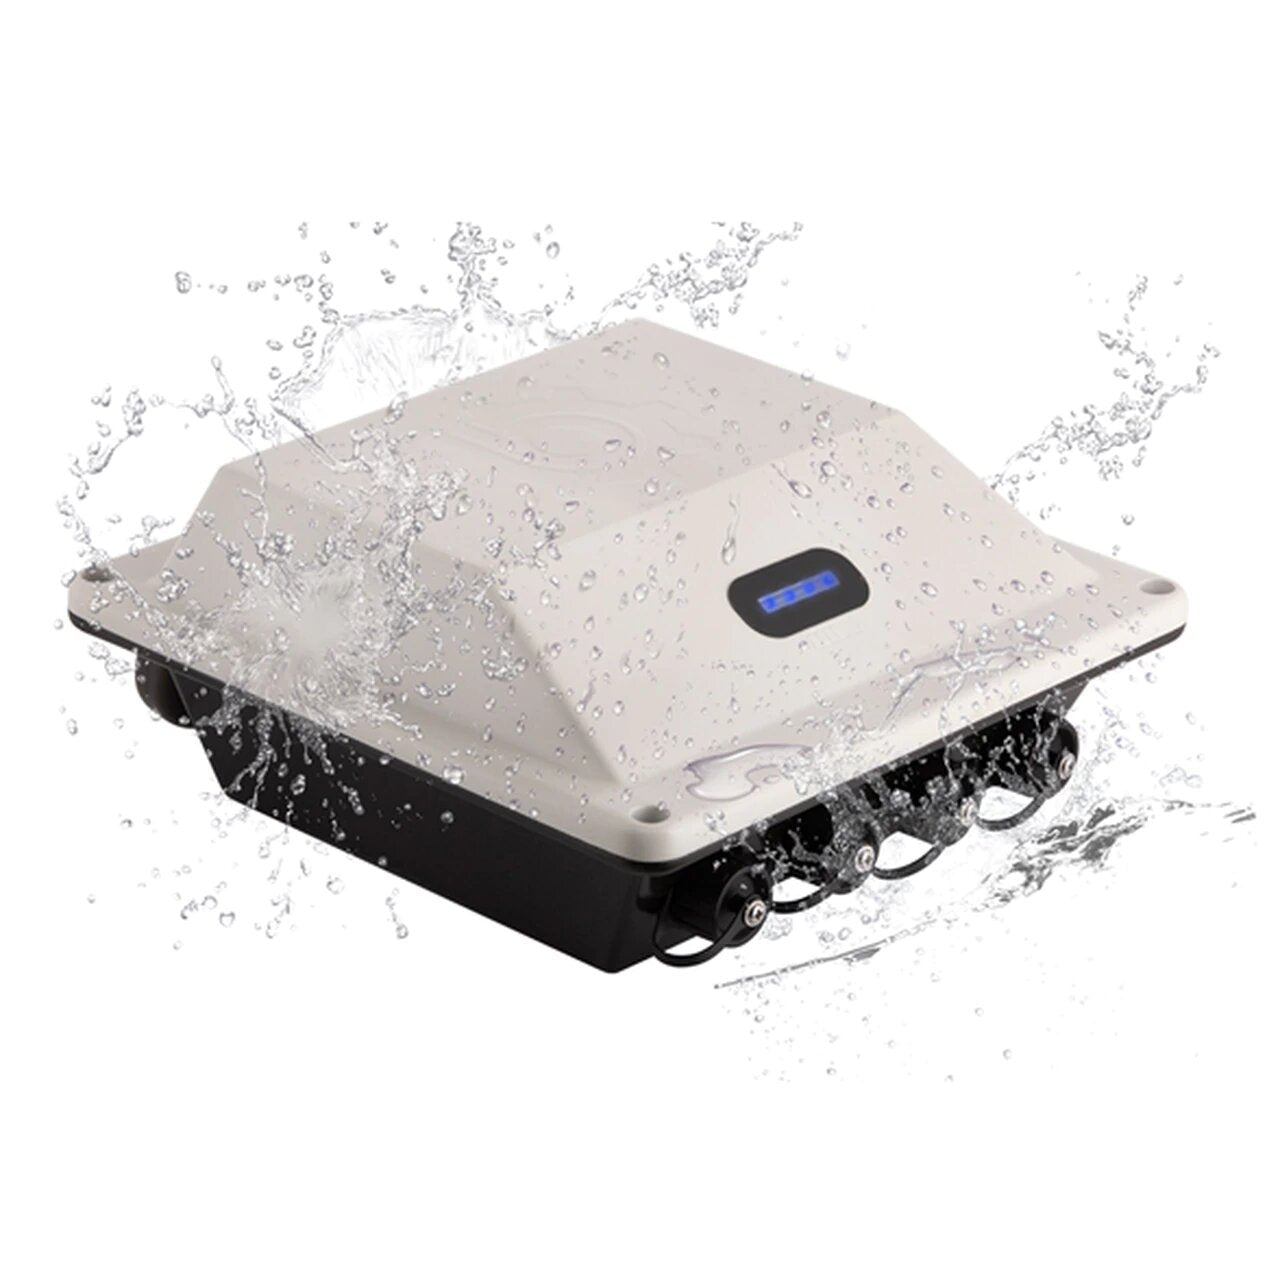 Bixpy PP-166 Power Bank Waterproof Outdoor Generator - Vibe Kayaks